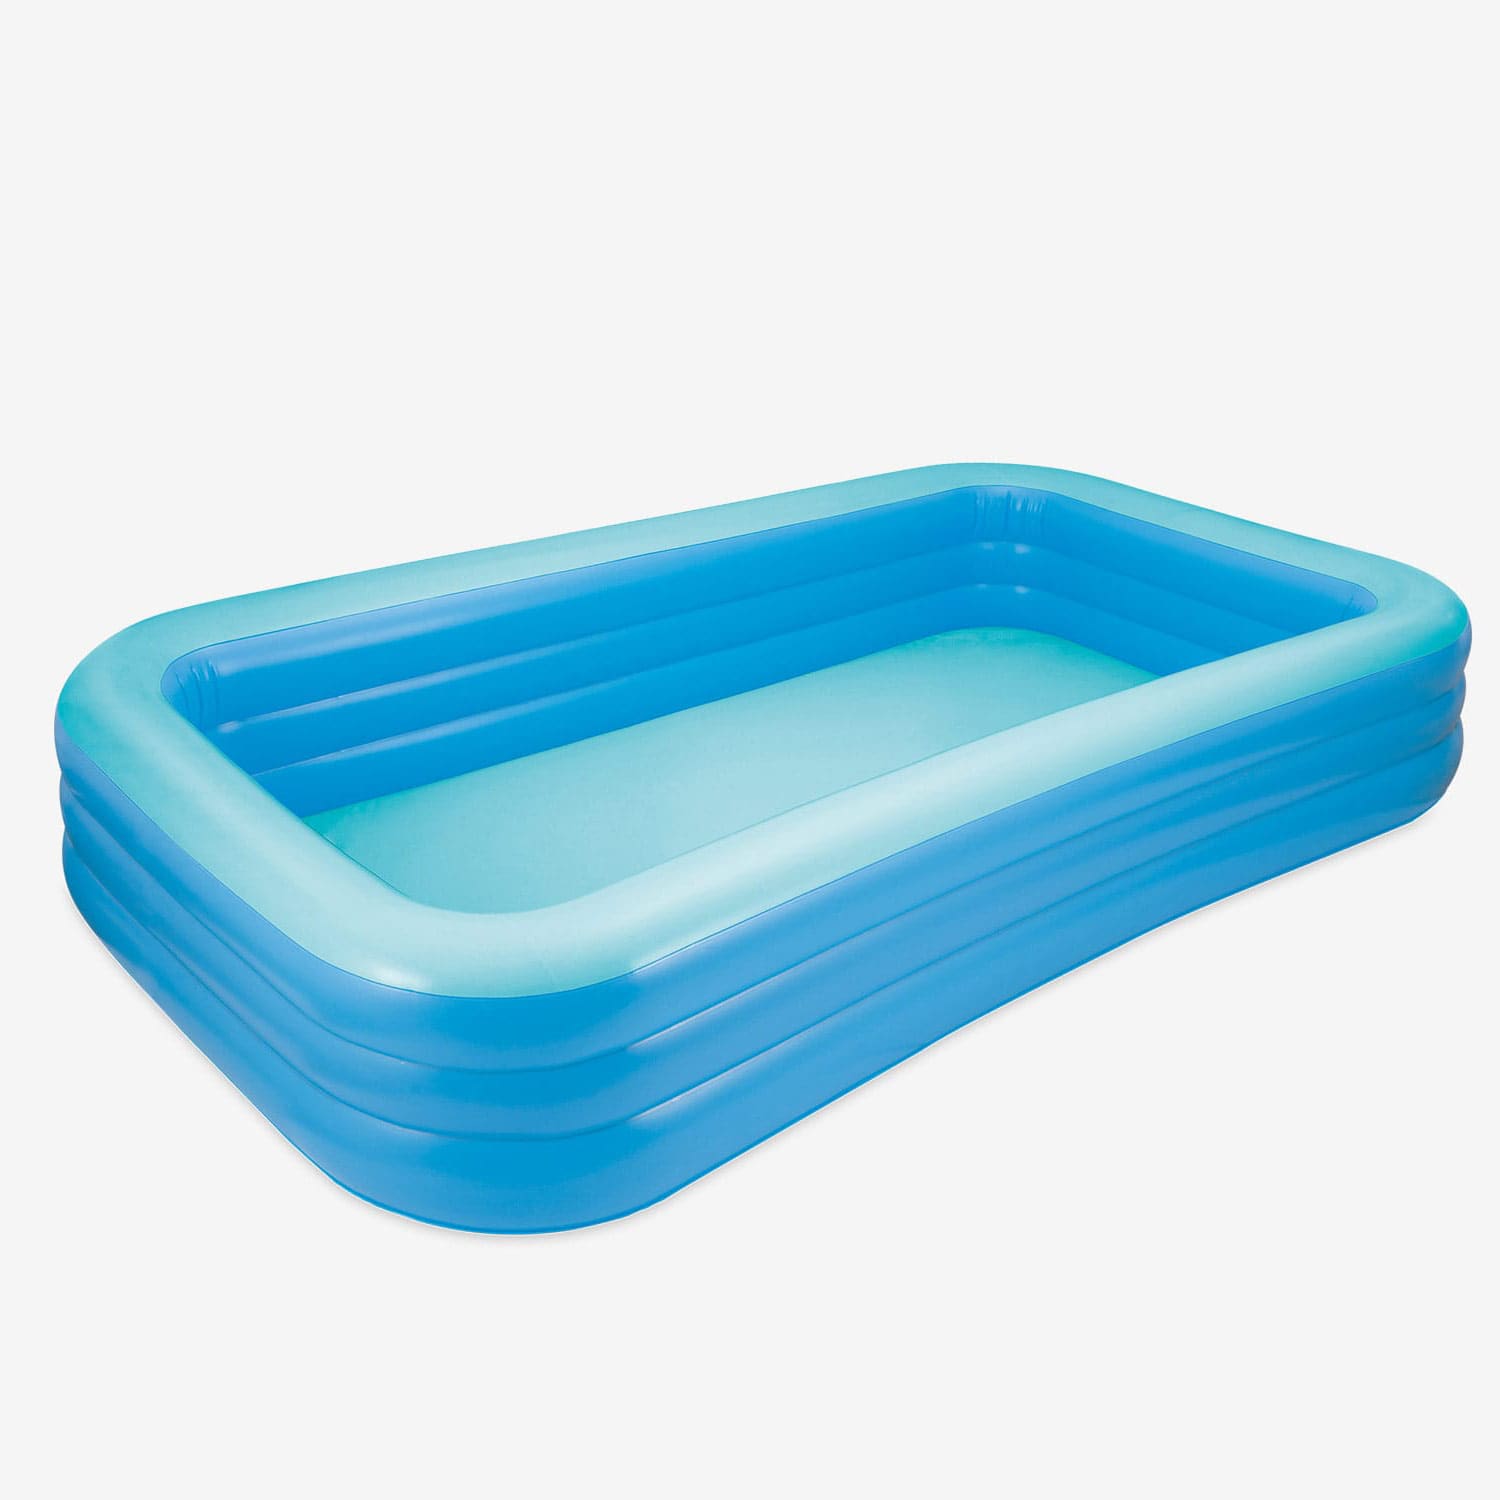 Funsicle Serenity Blue Pool